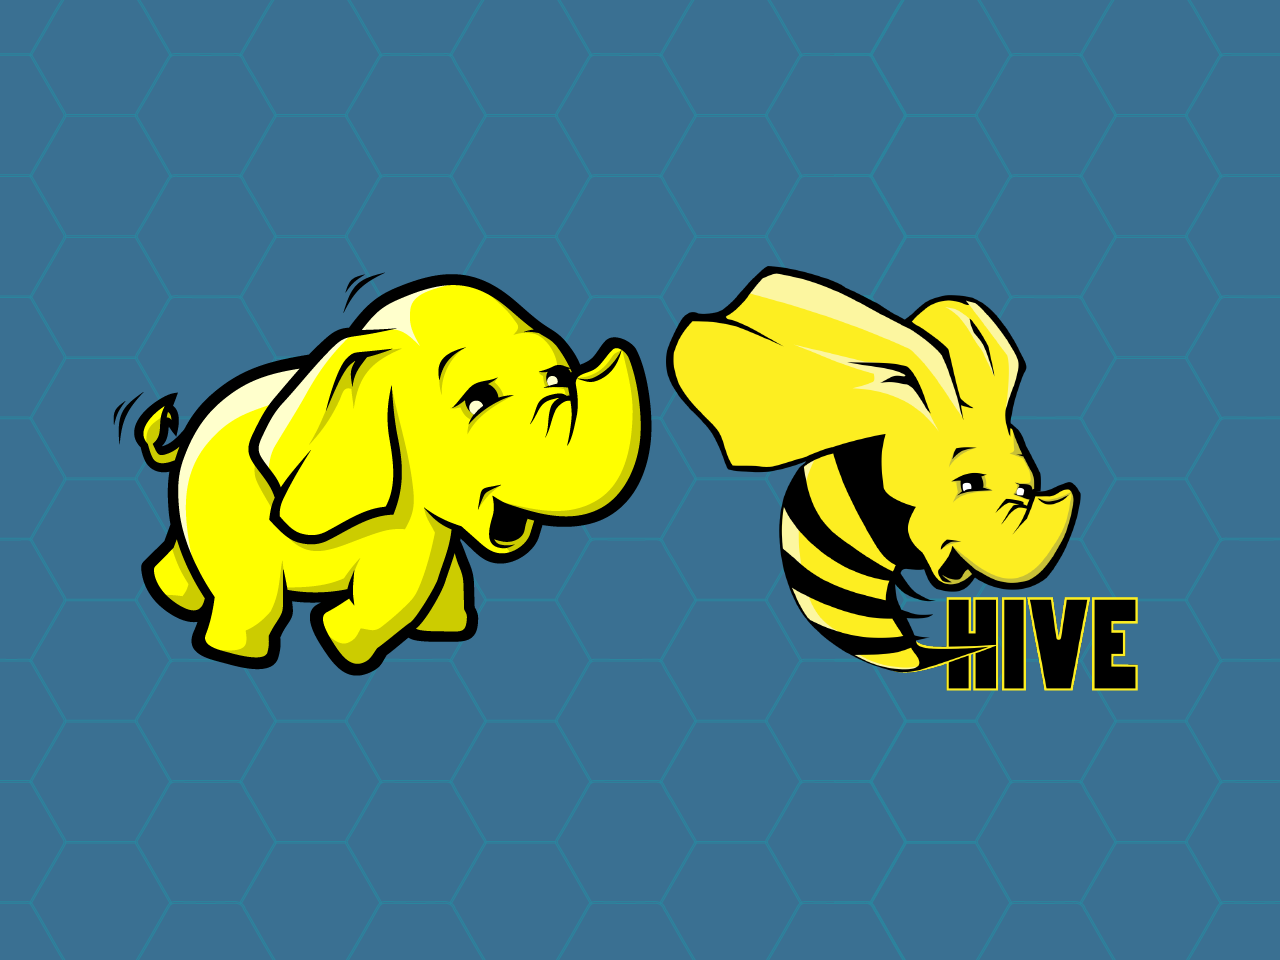 Accessing Hadoop Data Using Hive